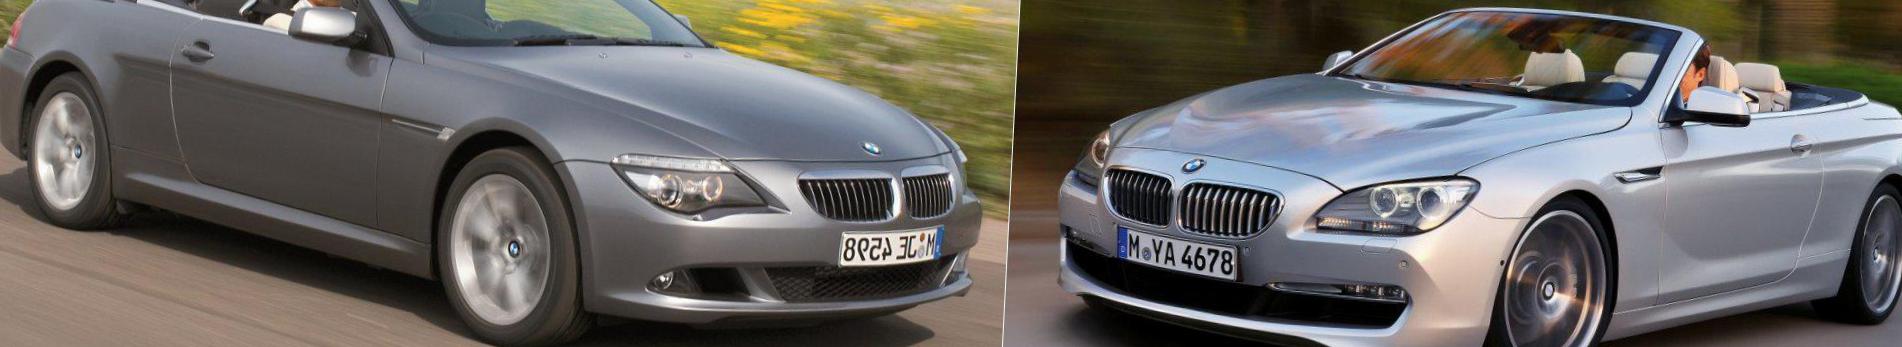 6 Series Cabrio (E64) BMW tuning 2014